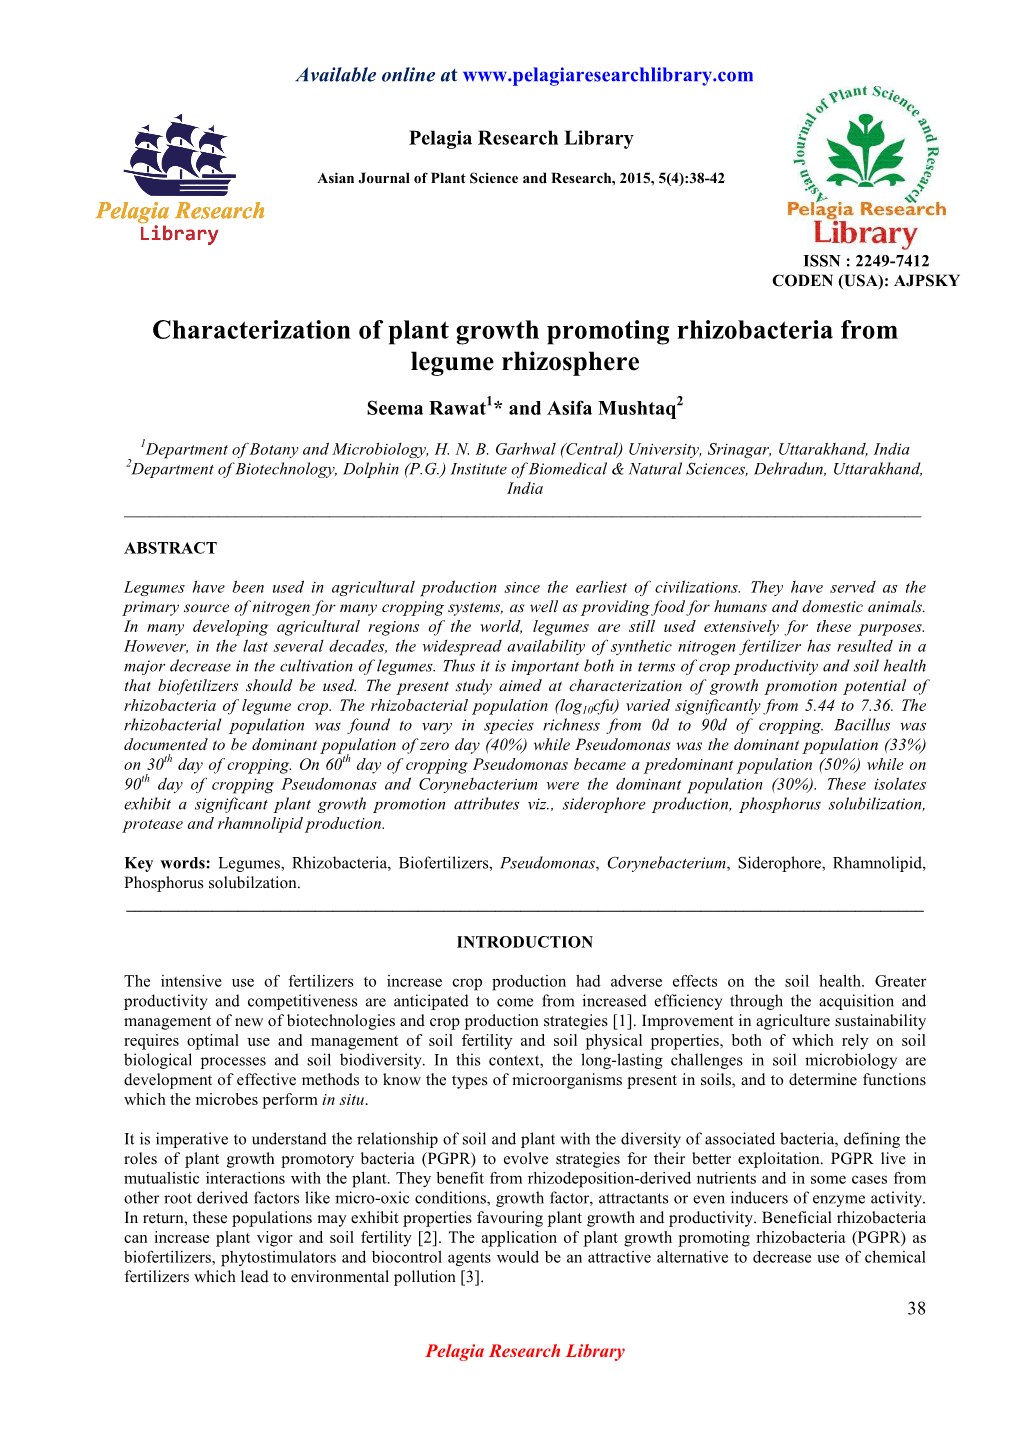 Characterization of Plant Growth Promoting Rhizobacteria from Legume Rhizosphere